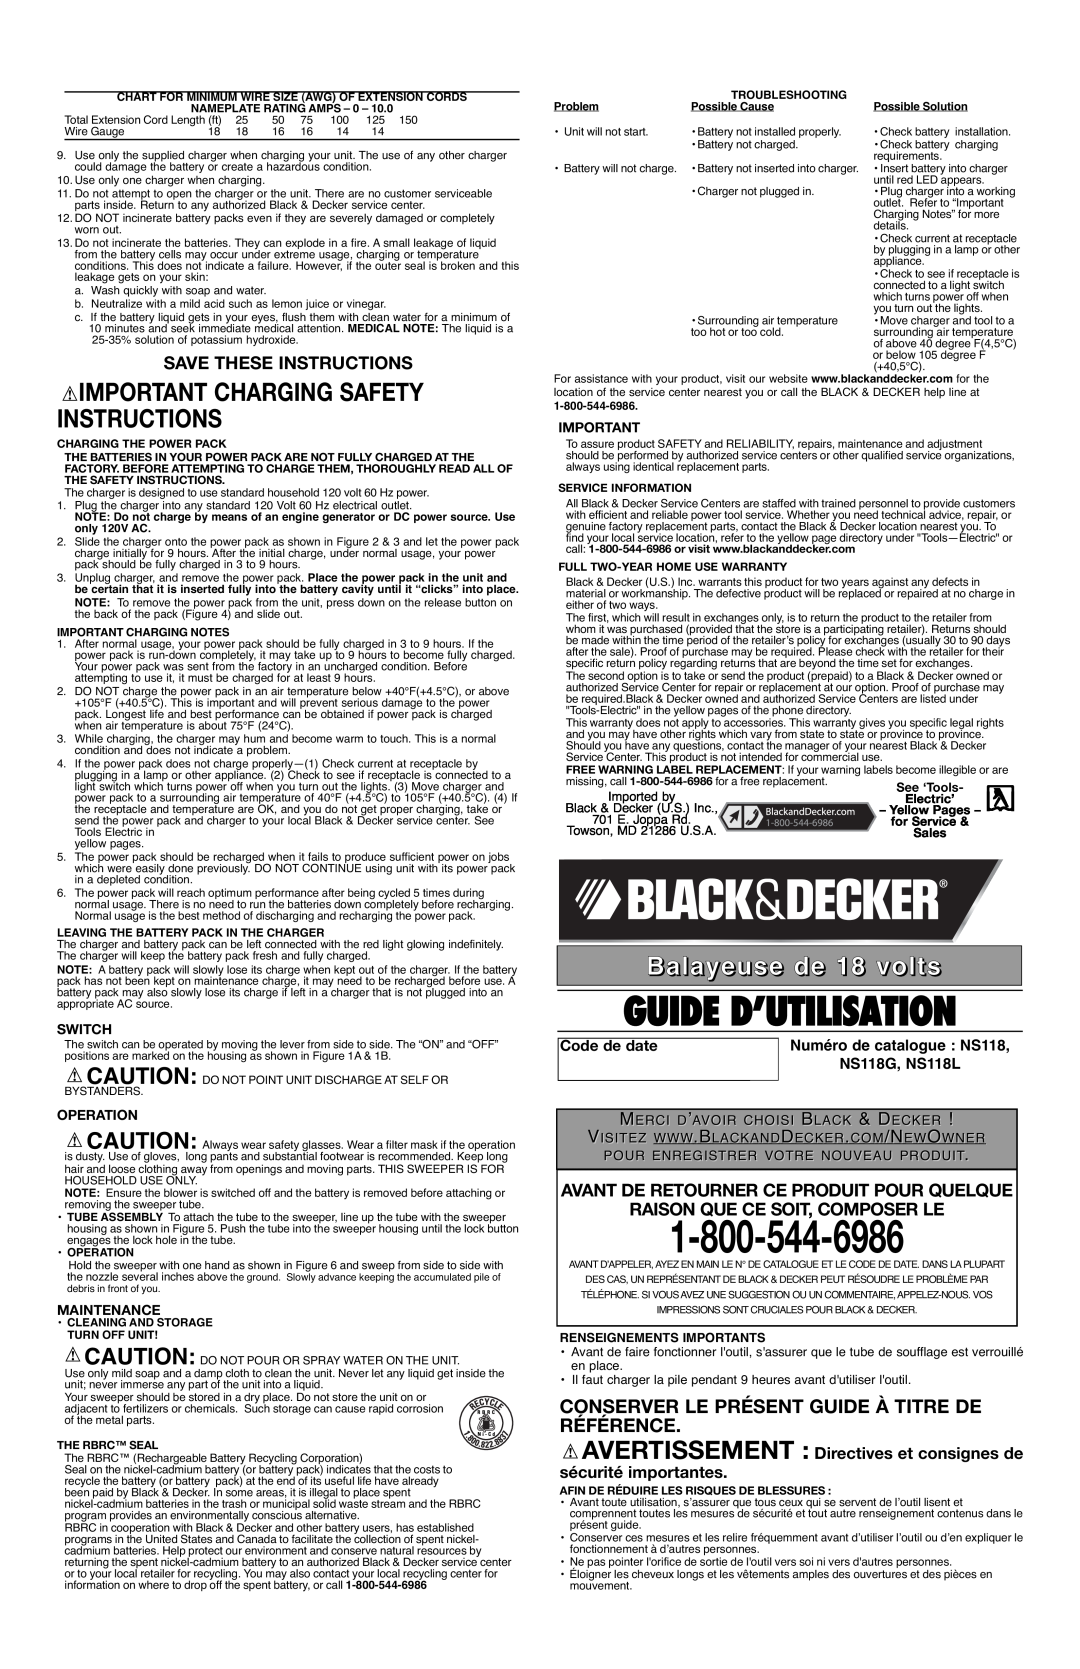 Black & Decker NS118 Guide D’Utilisation, Important Charging Safety Instructions, Balayeuse de 18 volts, Code de date 